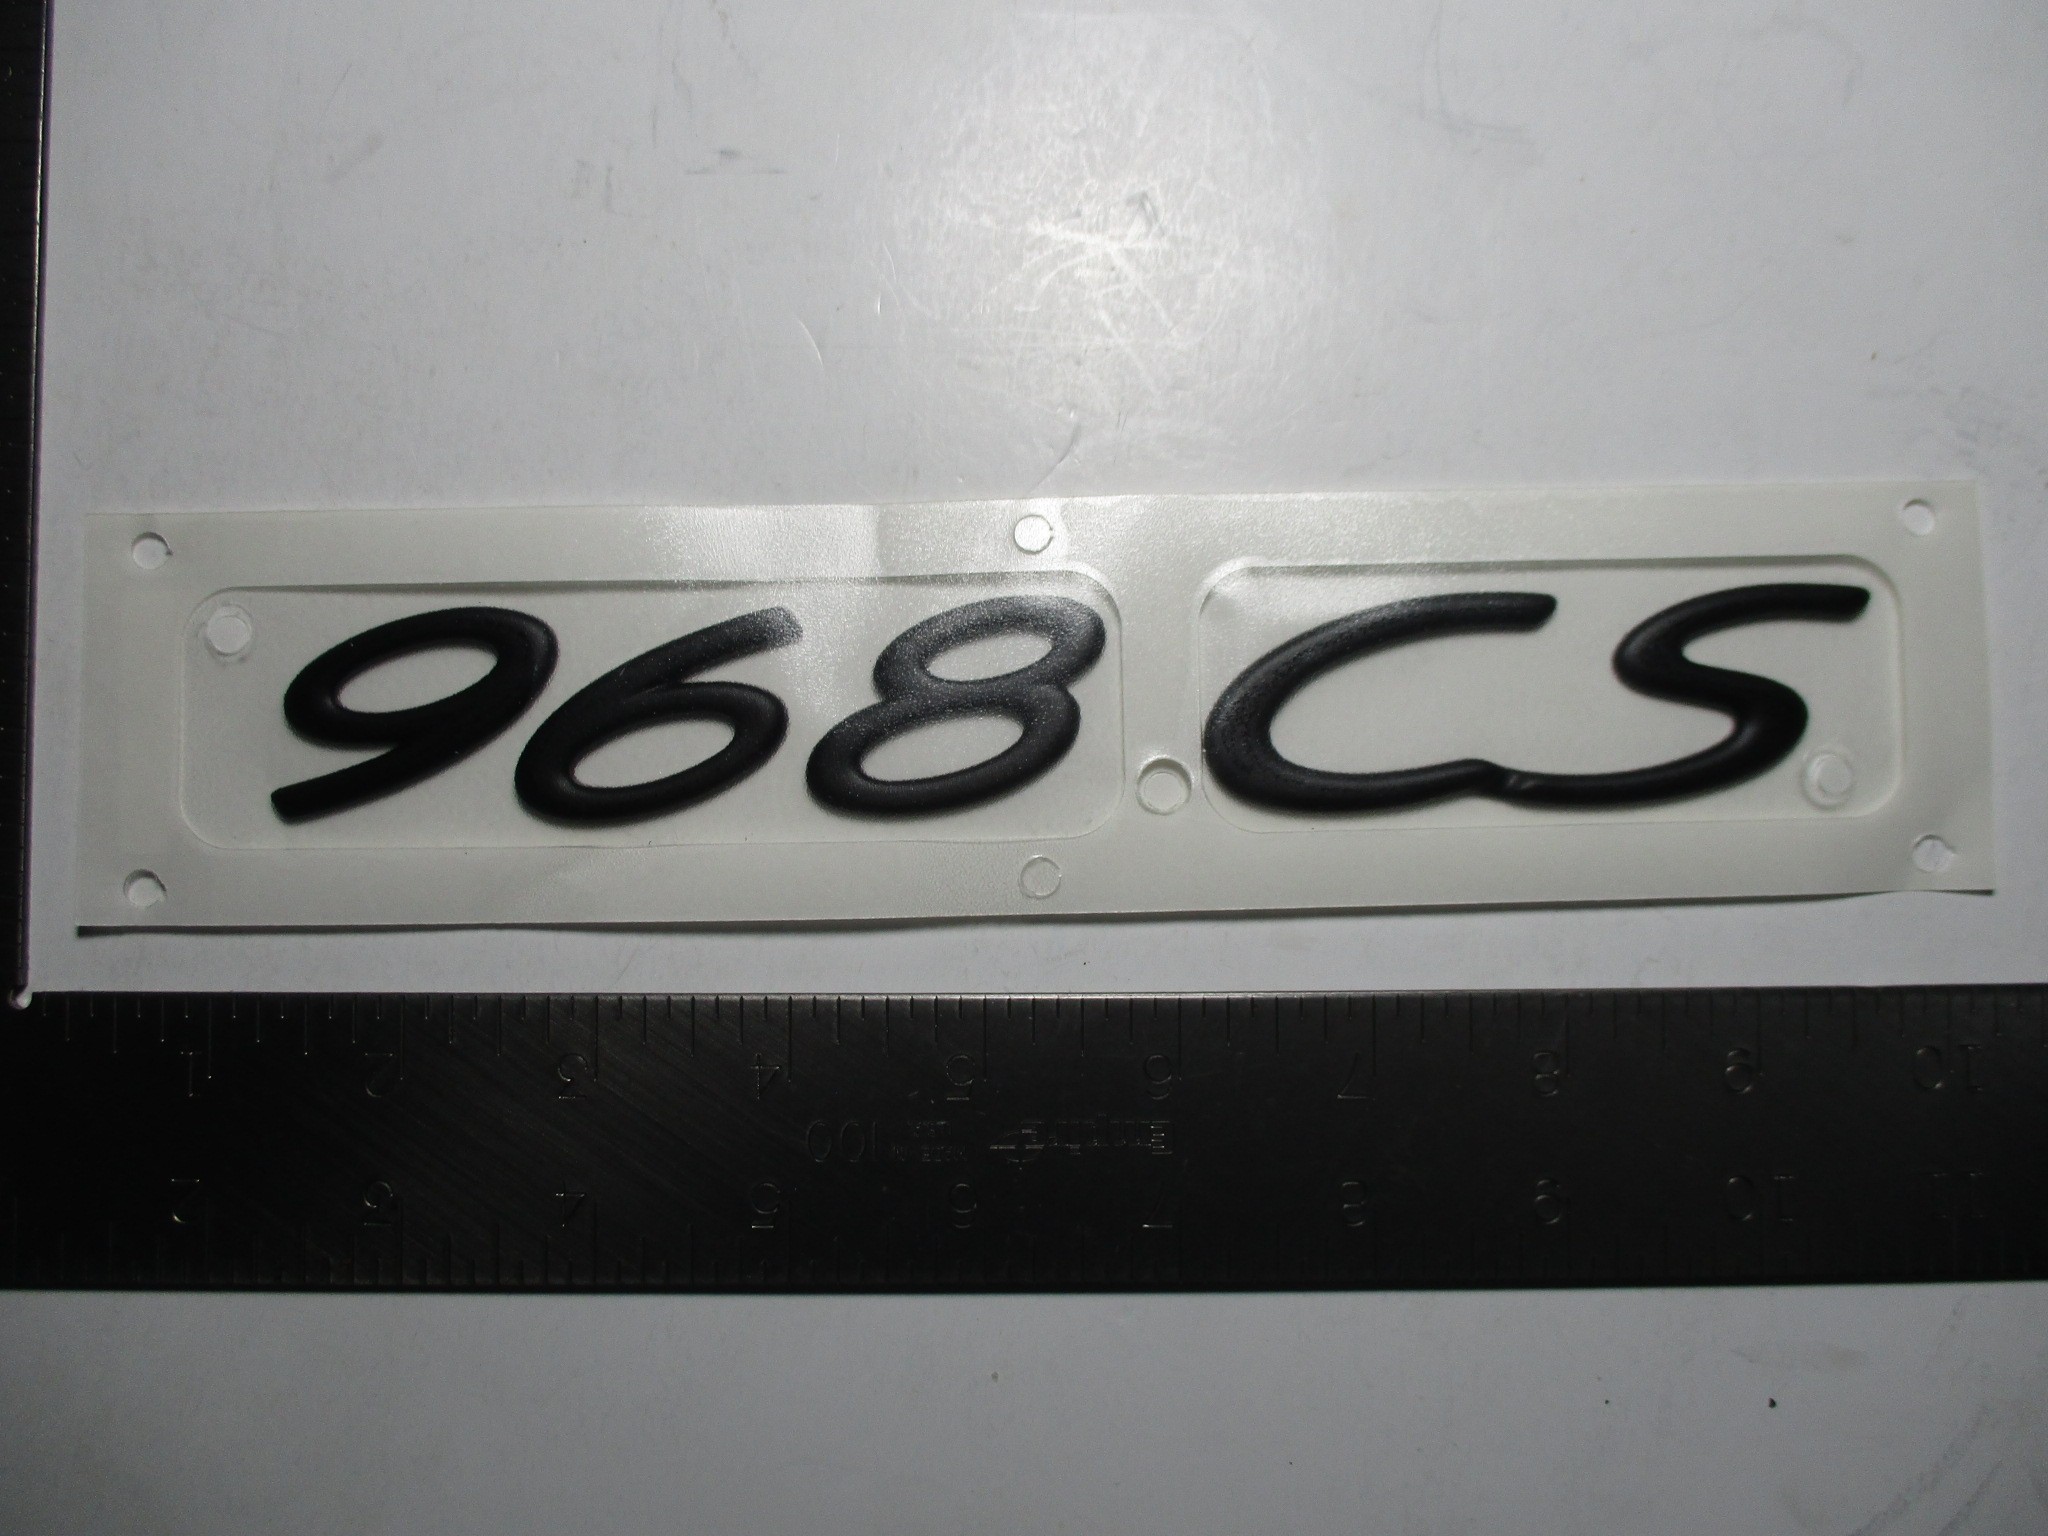 968 CS emblem